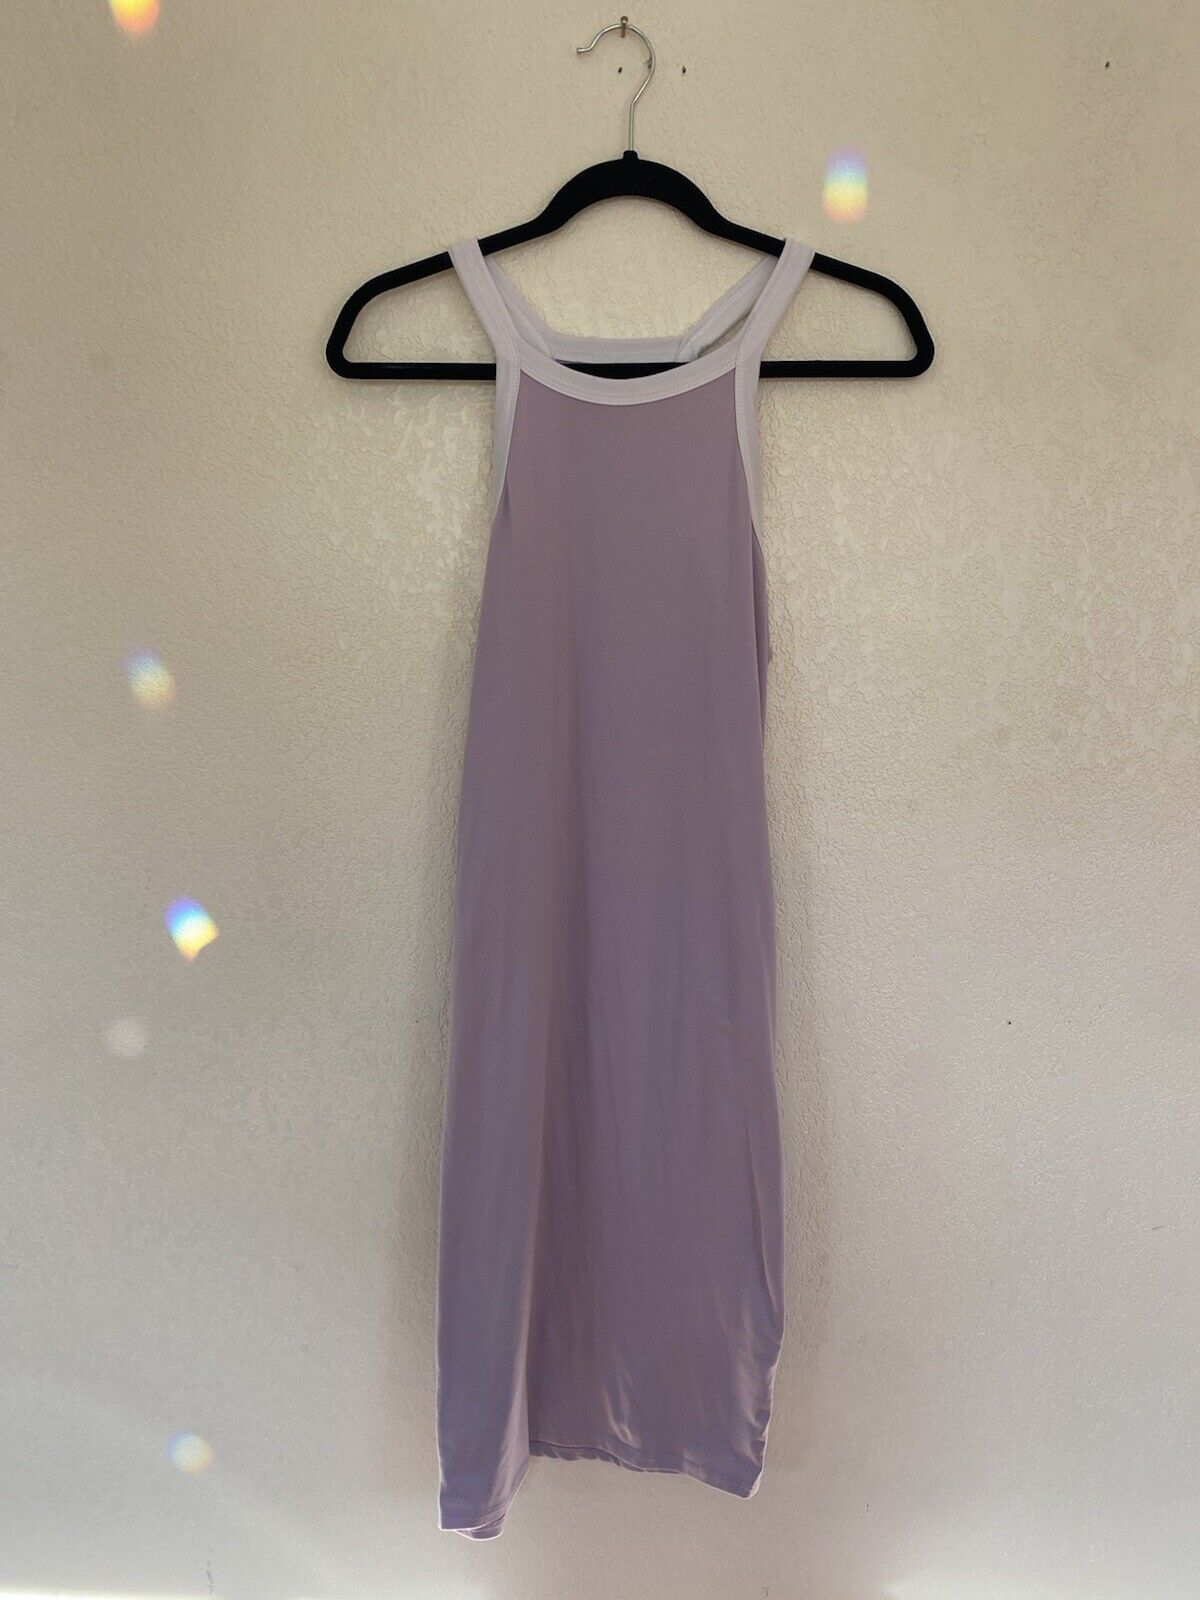 Purple Bodycon Midi Dress - Unbranded - Women's S/M # 2224